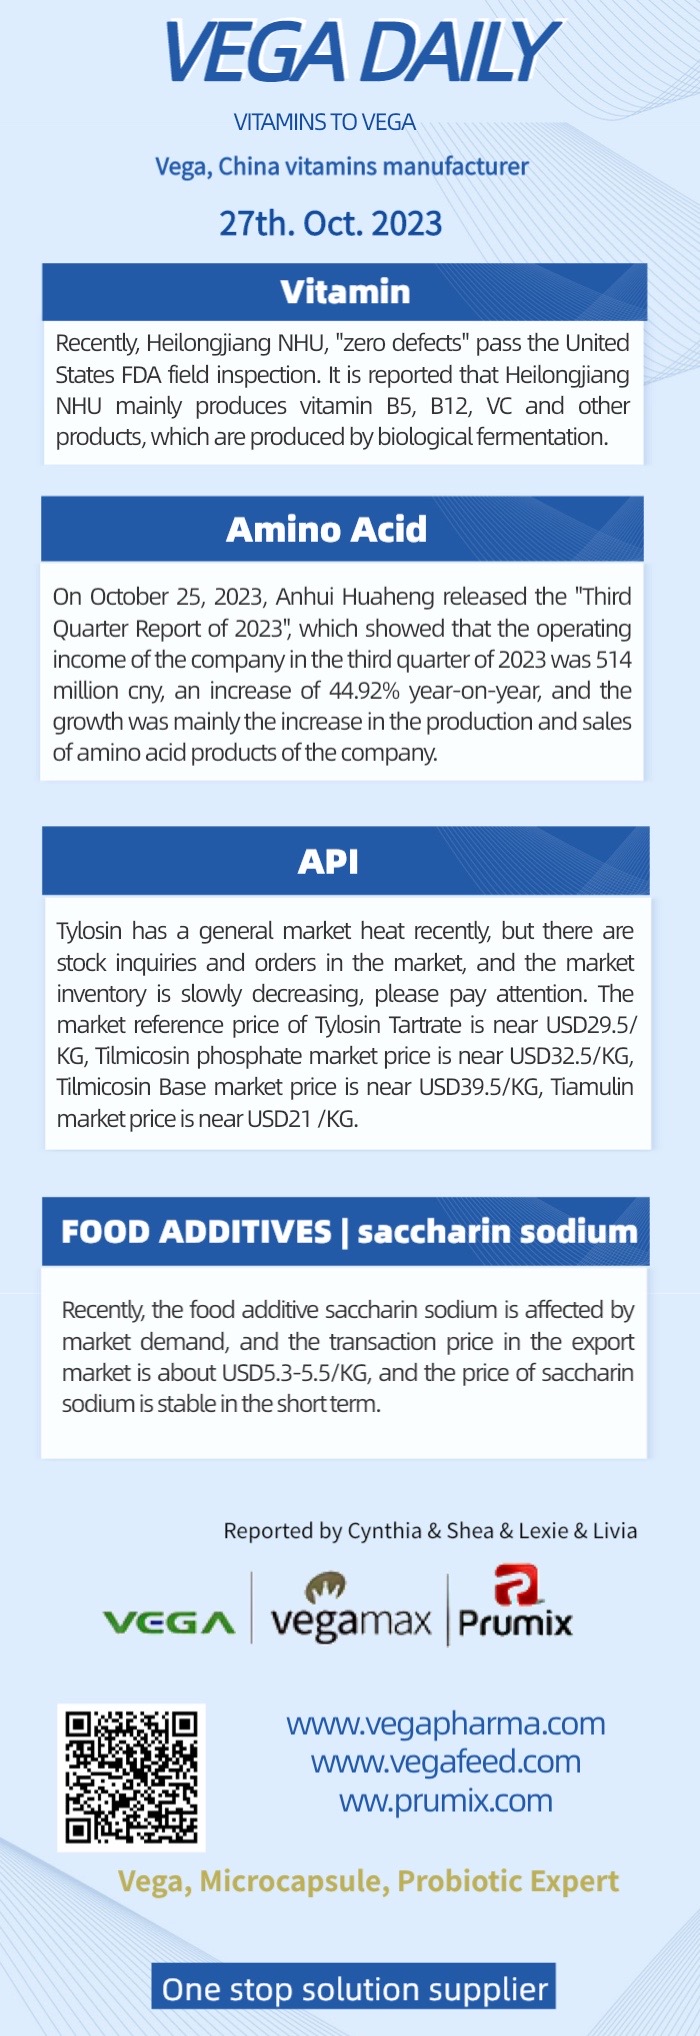 Vega Daily Dated on Oct 27th 2023 Vitamin Amino Acid API Saccharin sodium.jpg